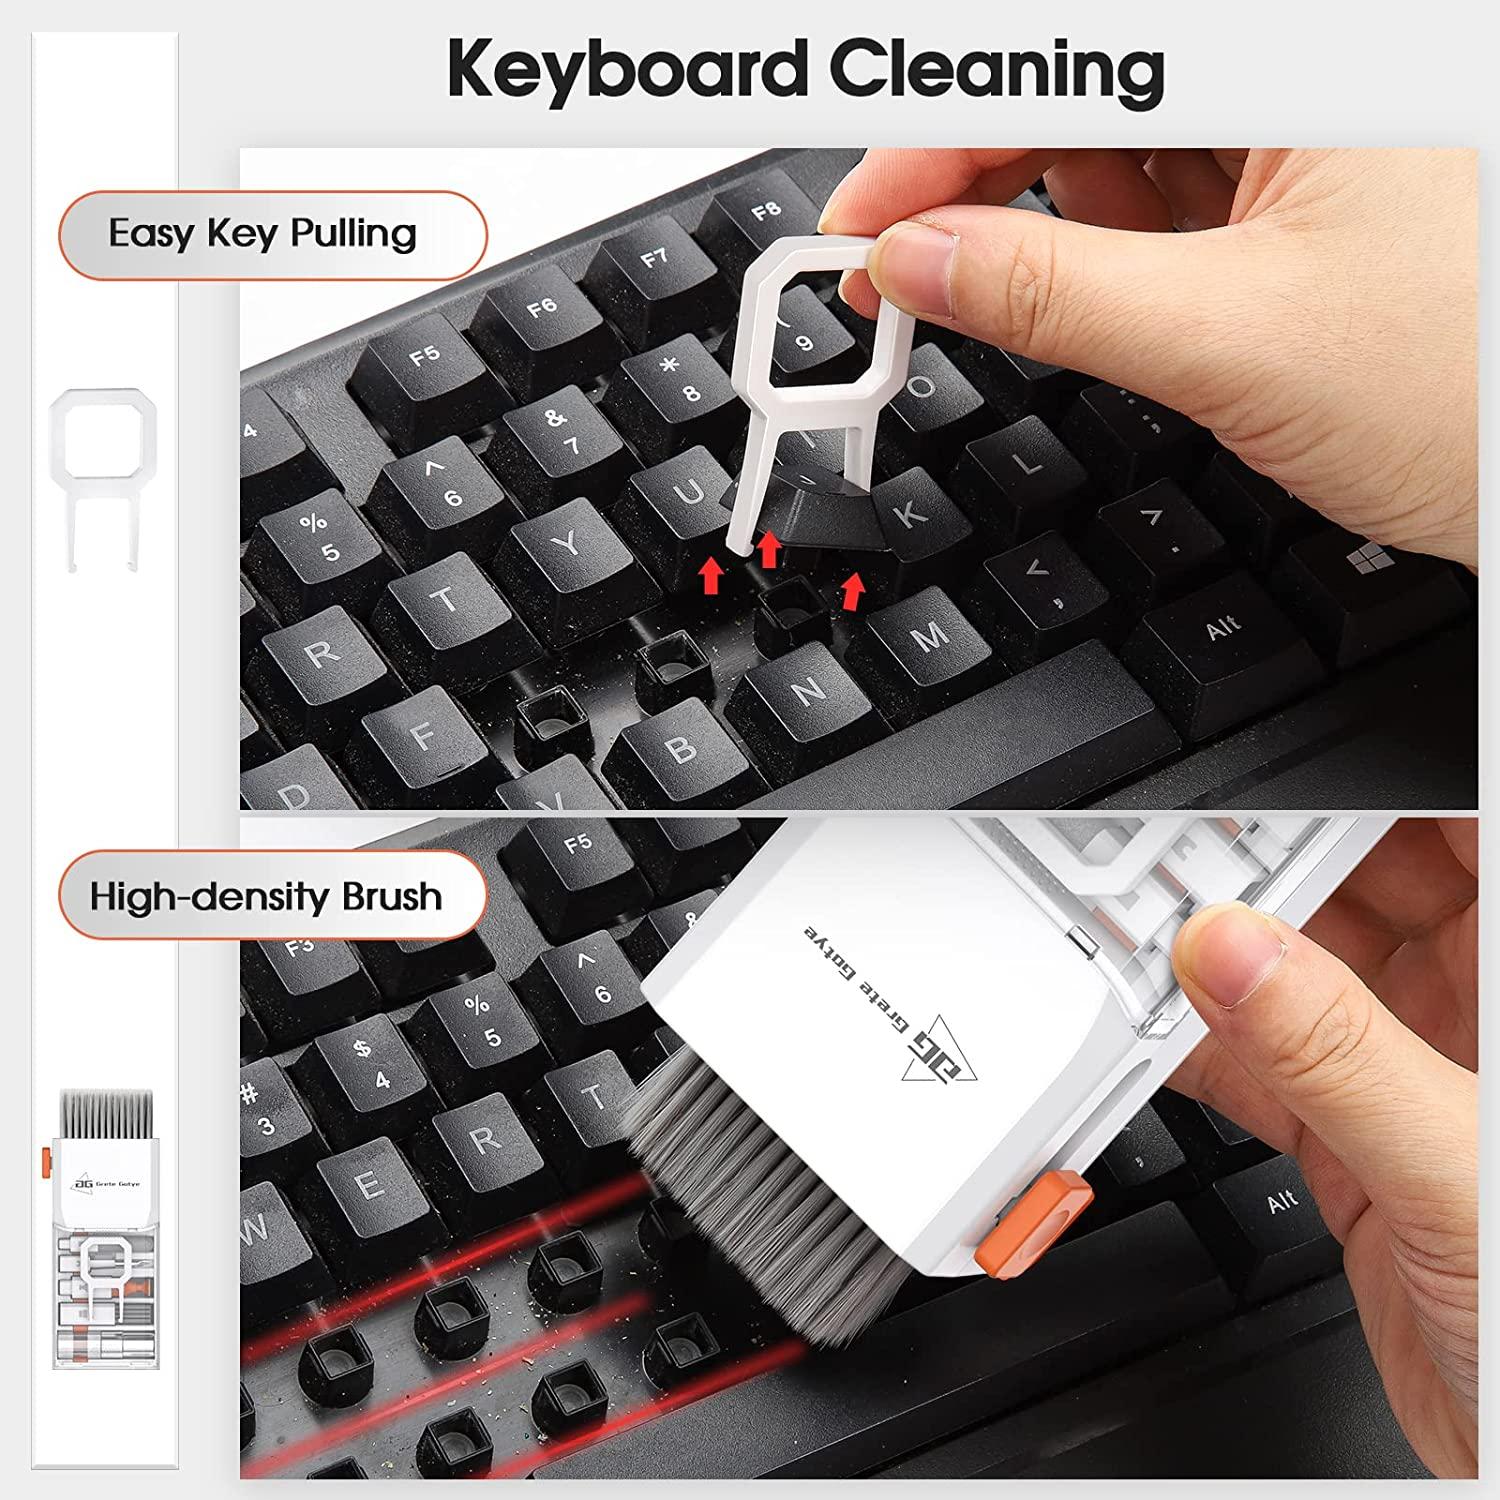 10-in-1 Keyboard Cleaner, Laptop Cleaning Kit Lens Pen for DSLR